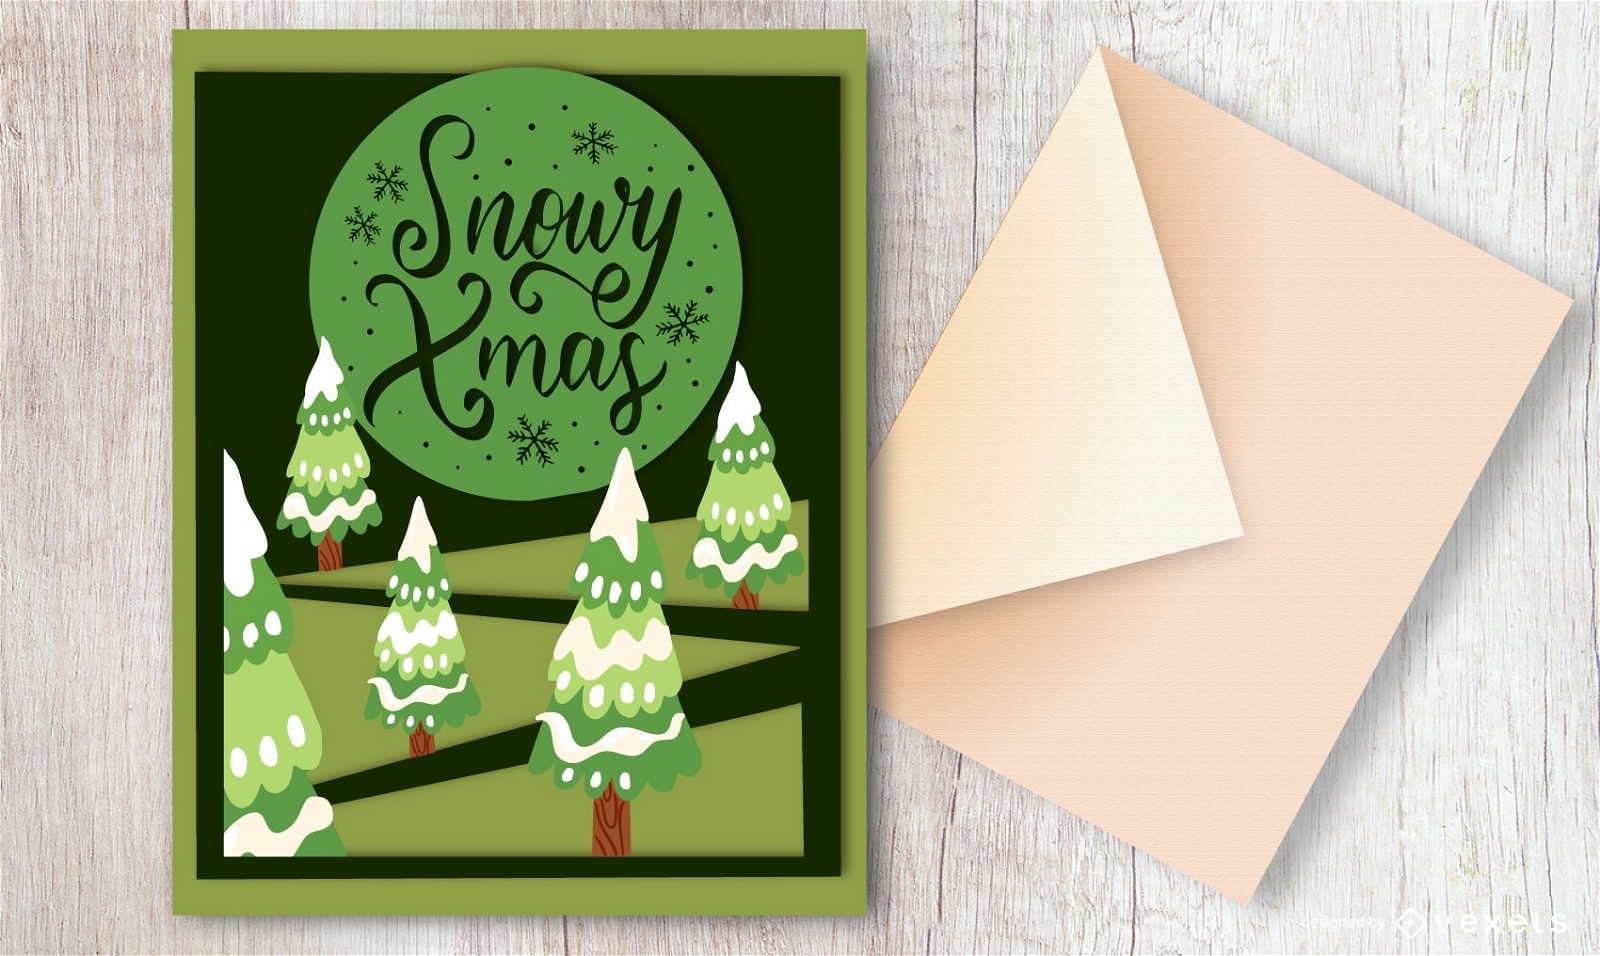 Snowy xmas card design